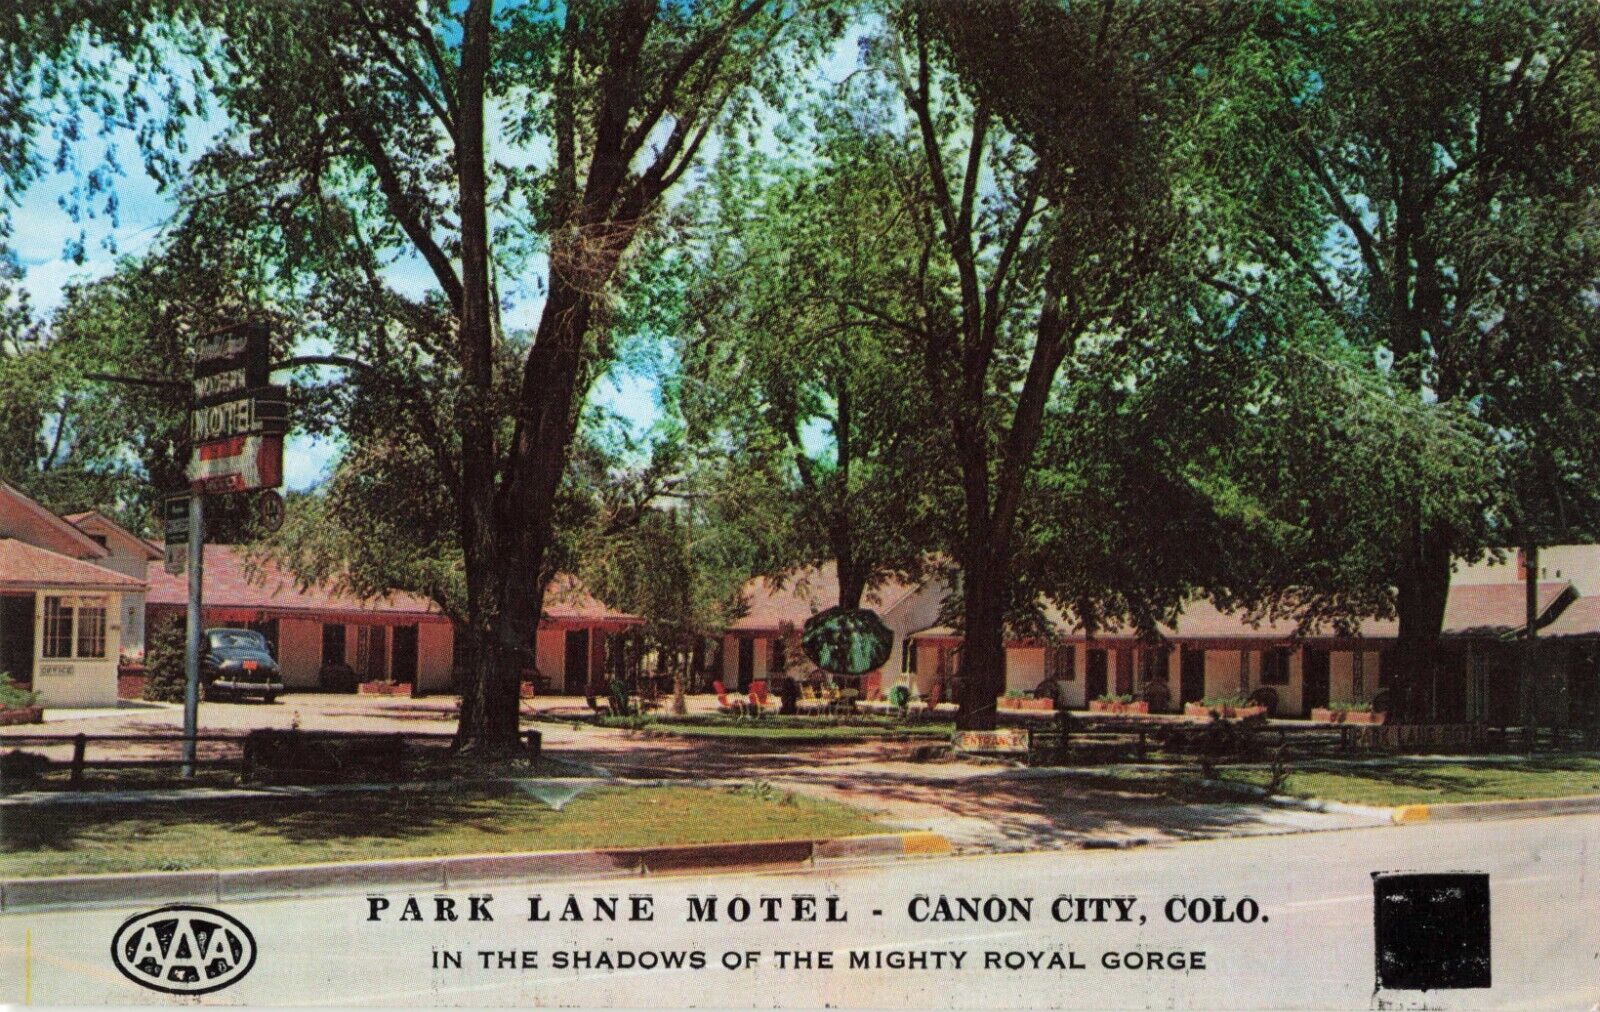 Canon City Colorado, Park Lane Motel Advertising, Vintage Postcard